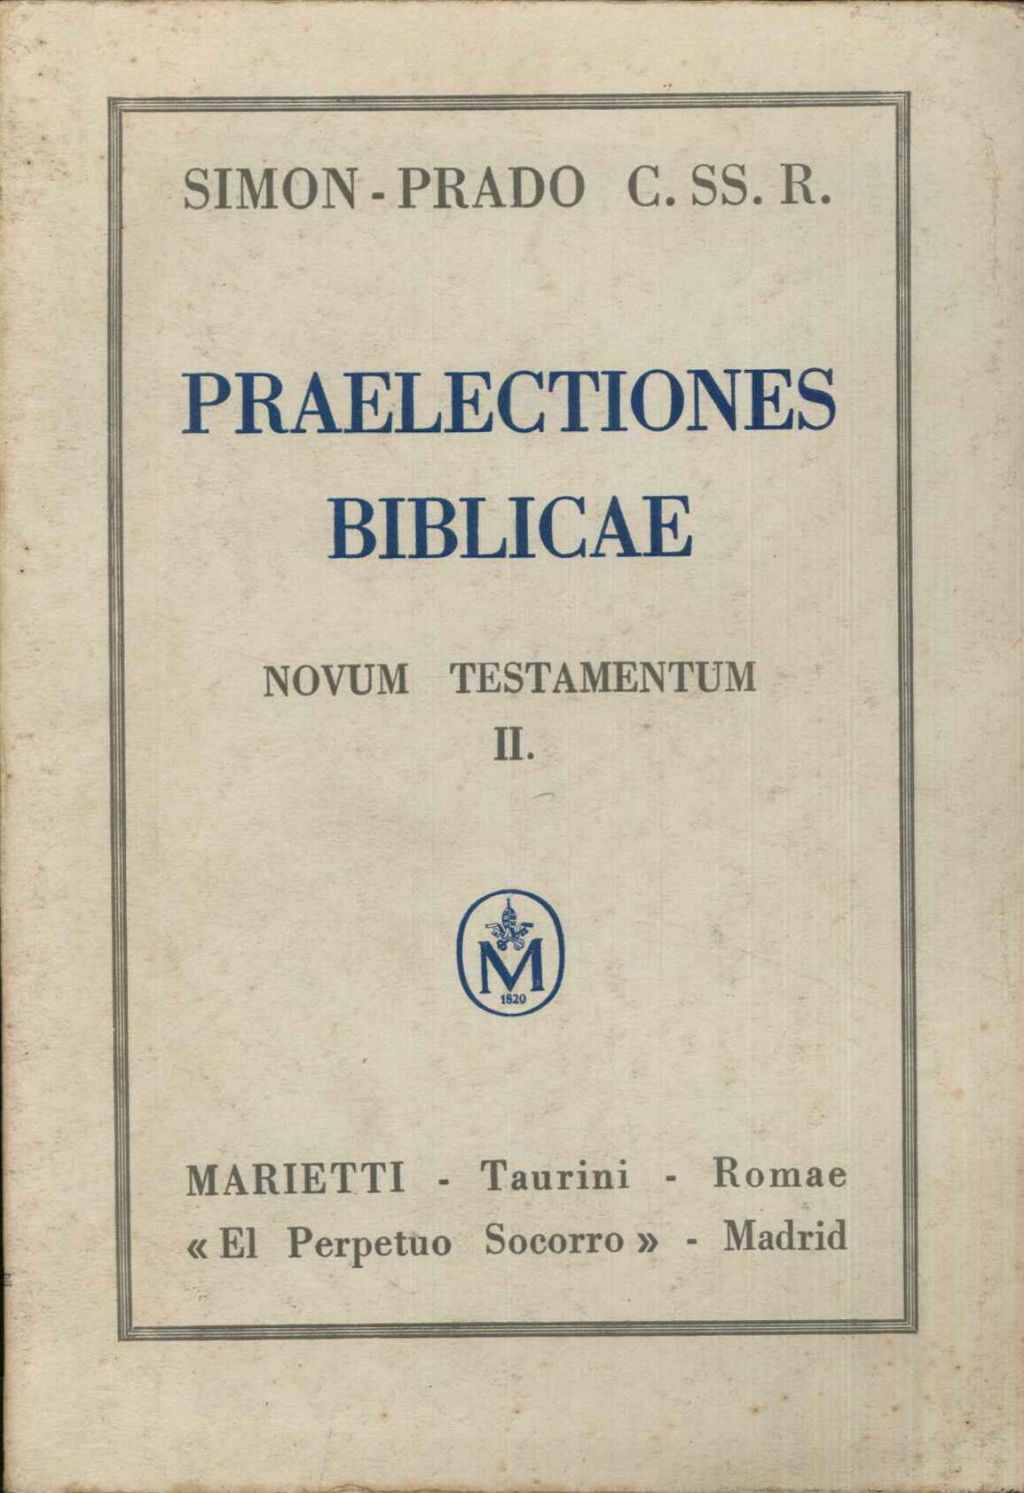 Praelectiones Biblicae   Vetus Testamentum vol.II